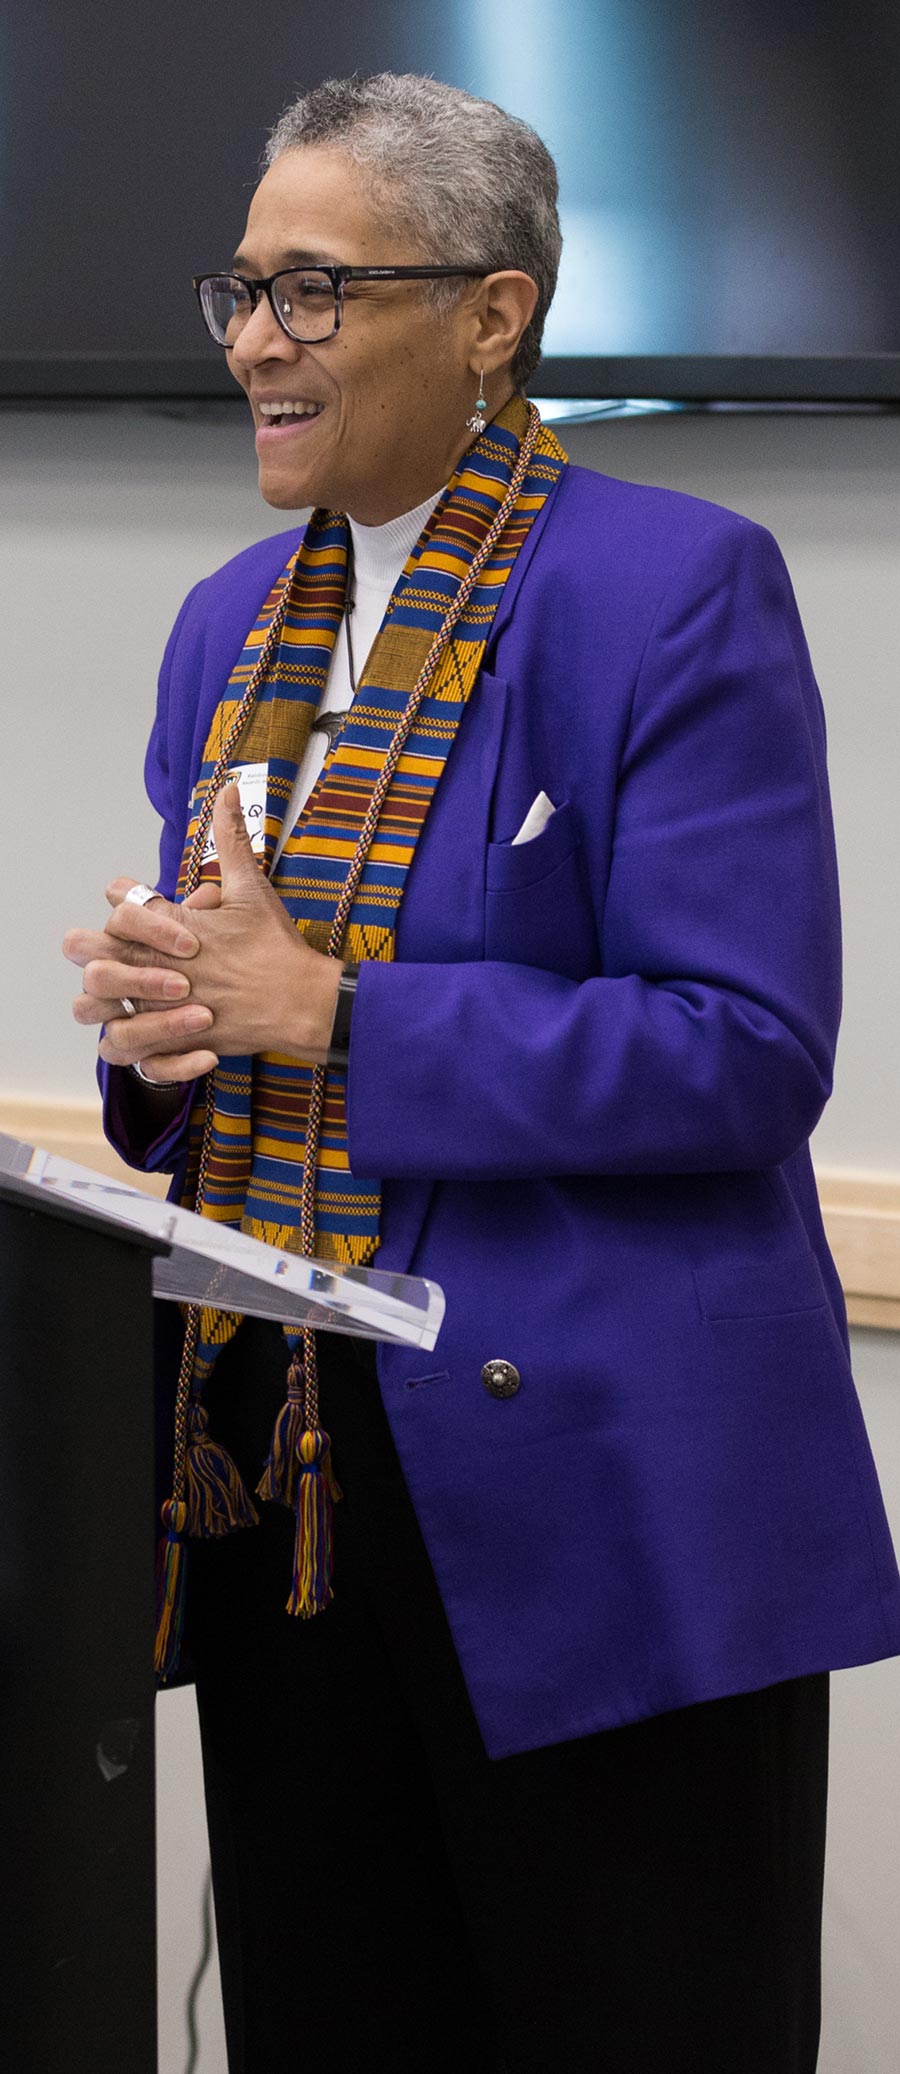 Marquita Chamblee stands at a podium, mid speech